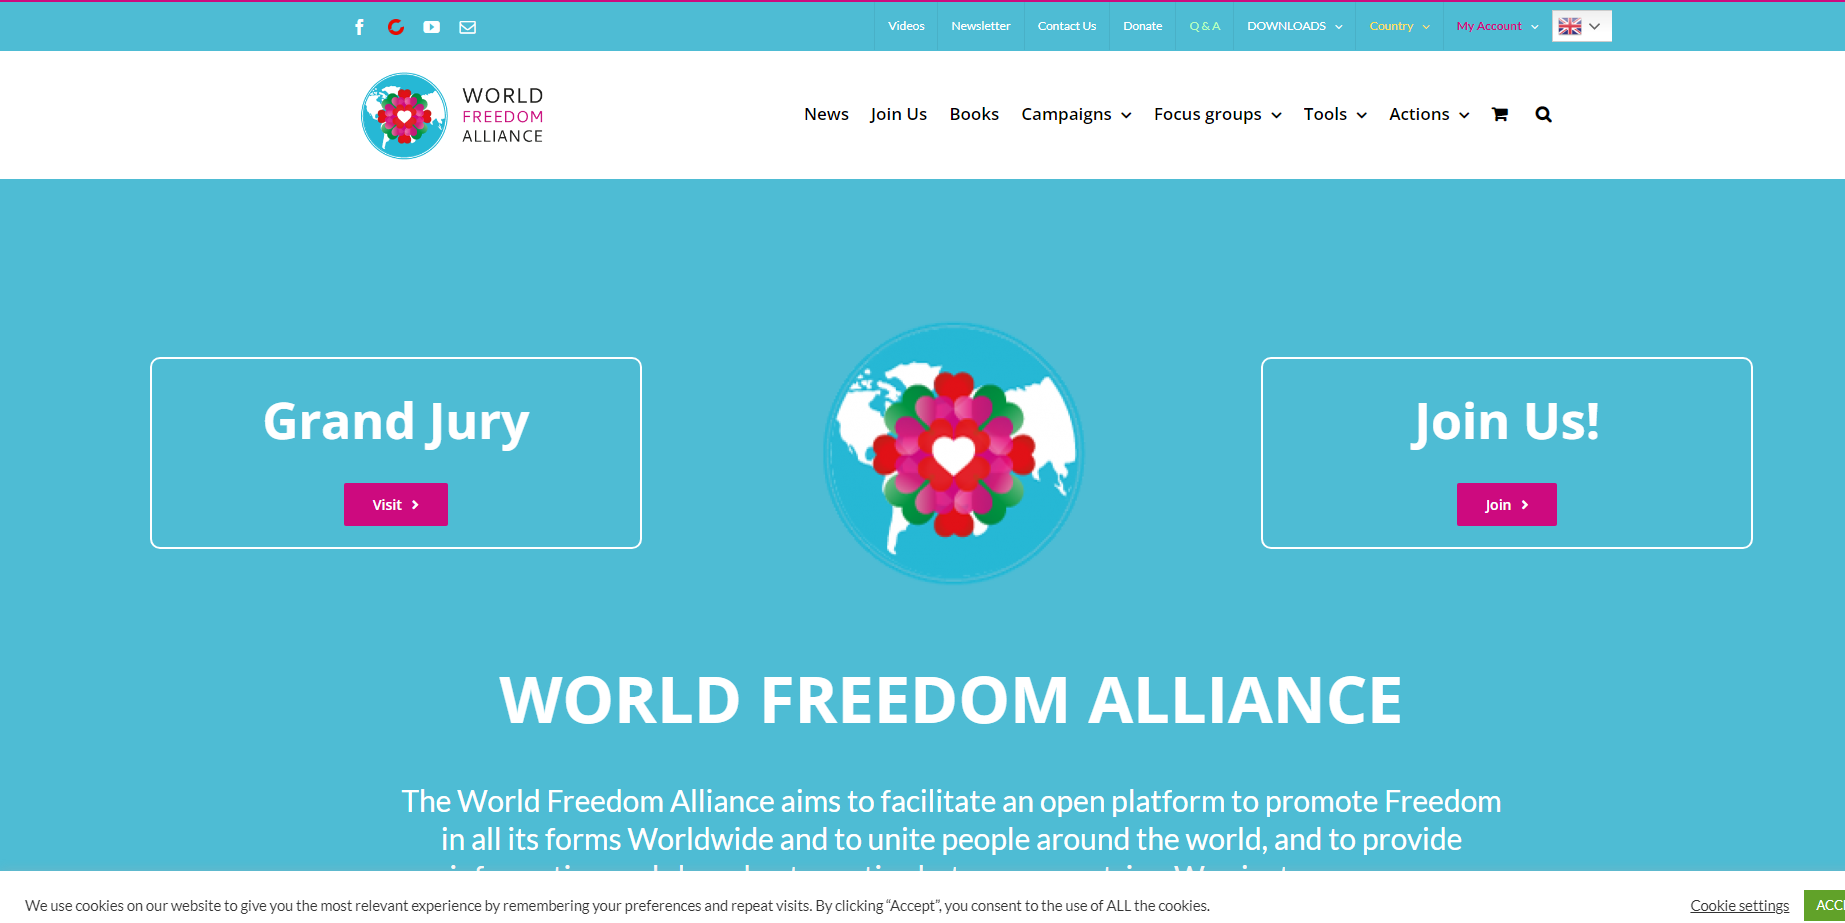 World Freedom Alliance